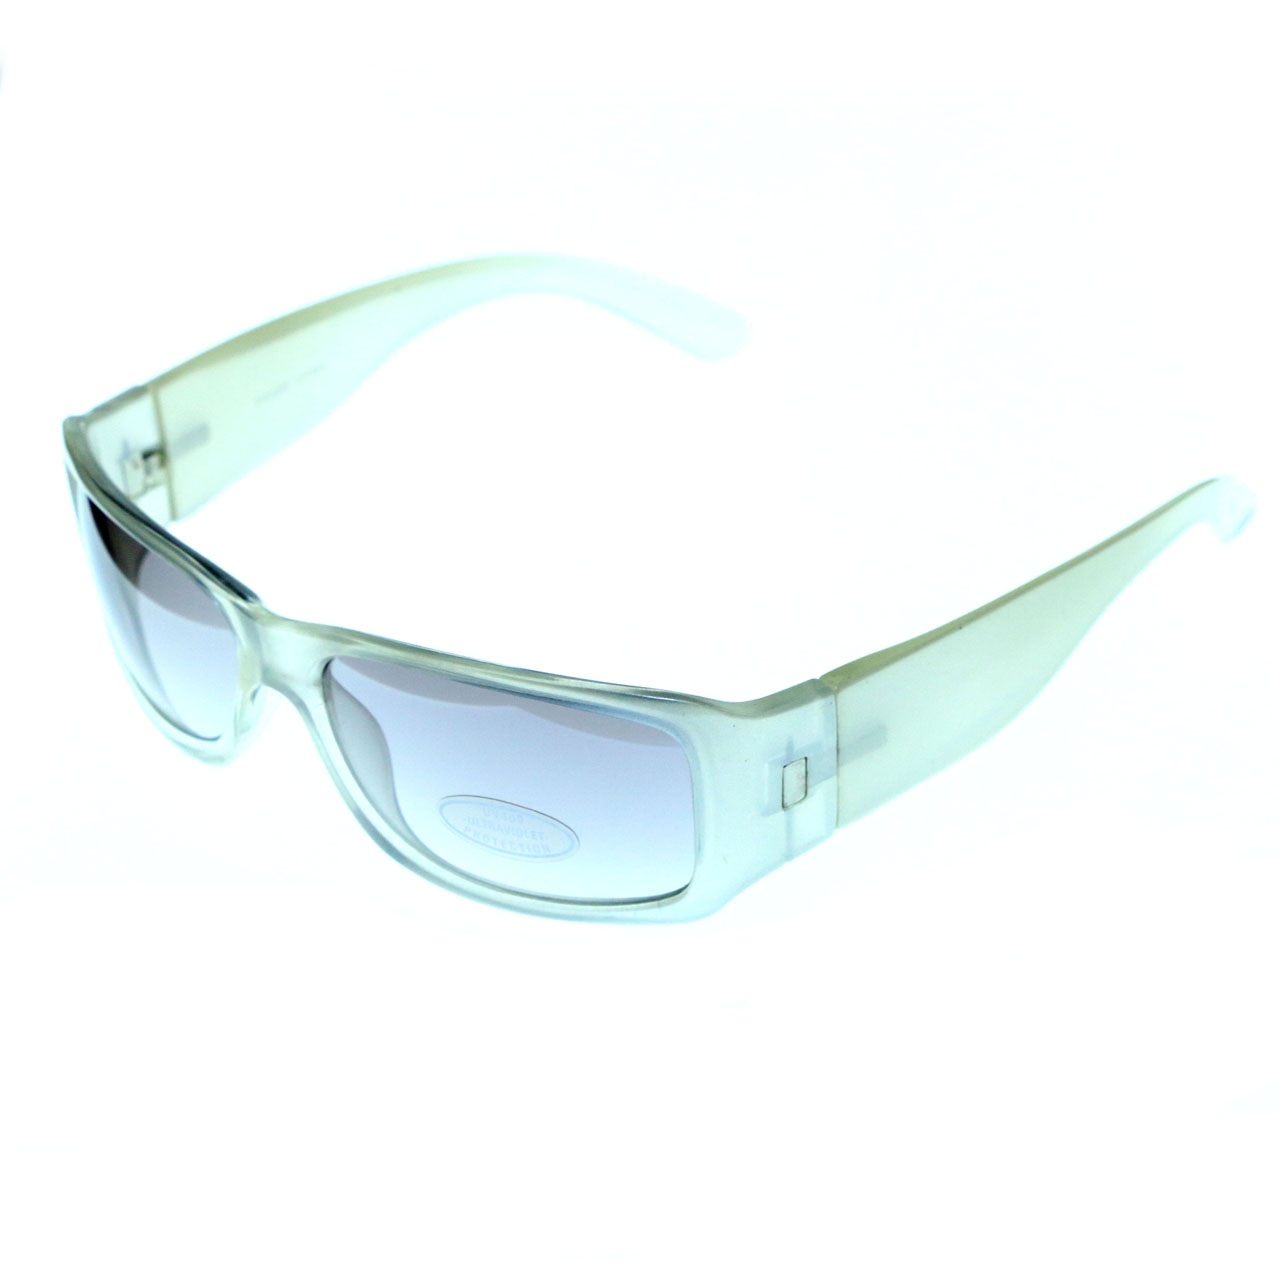 Mi Amore UV protection Sport-Sunglasses White Frame/Gray Lens - image 1 of 2